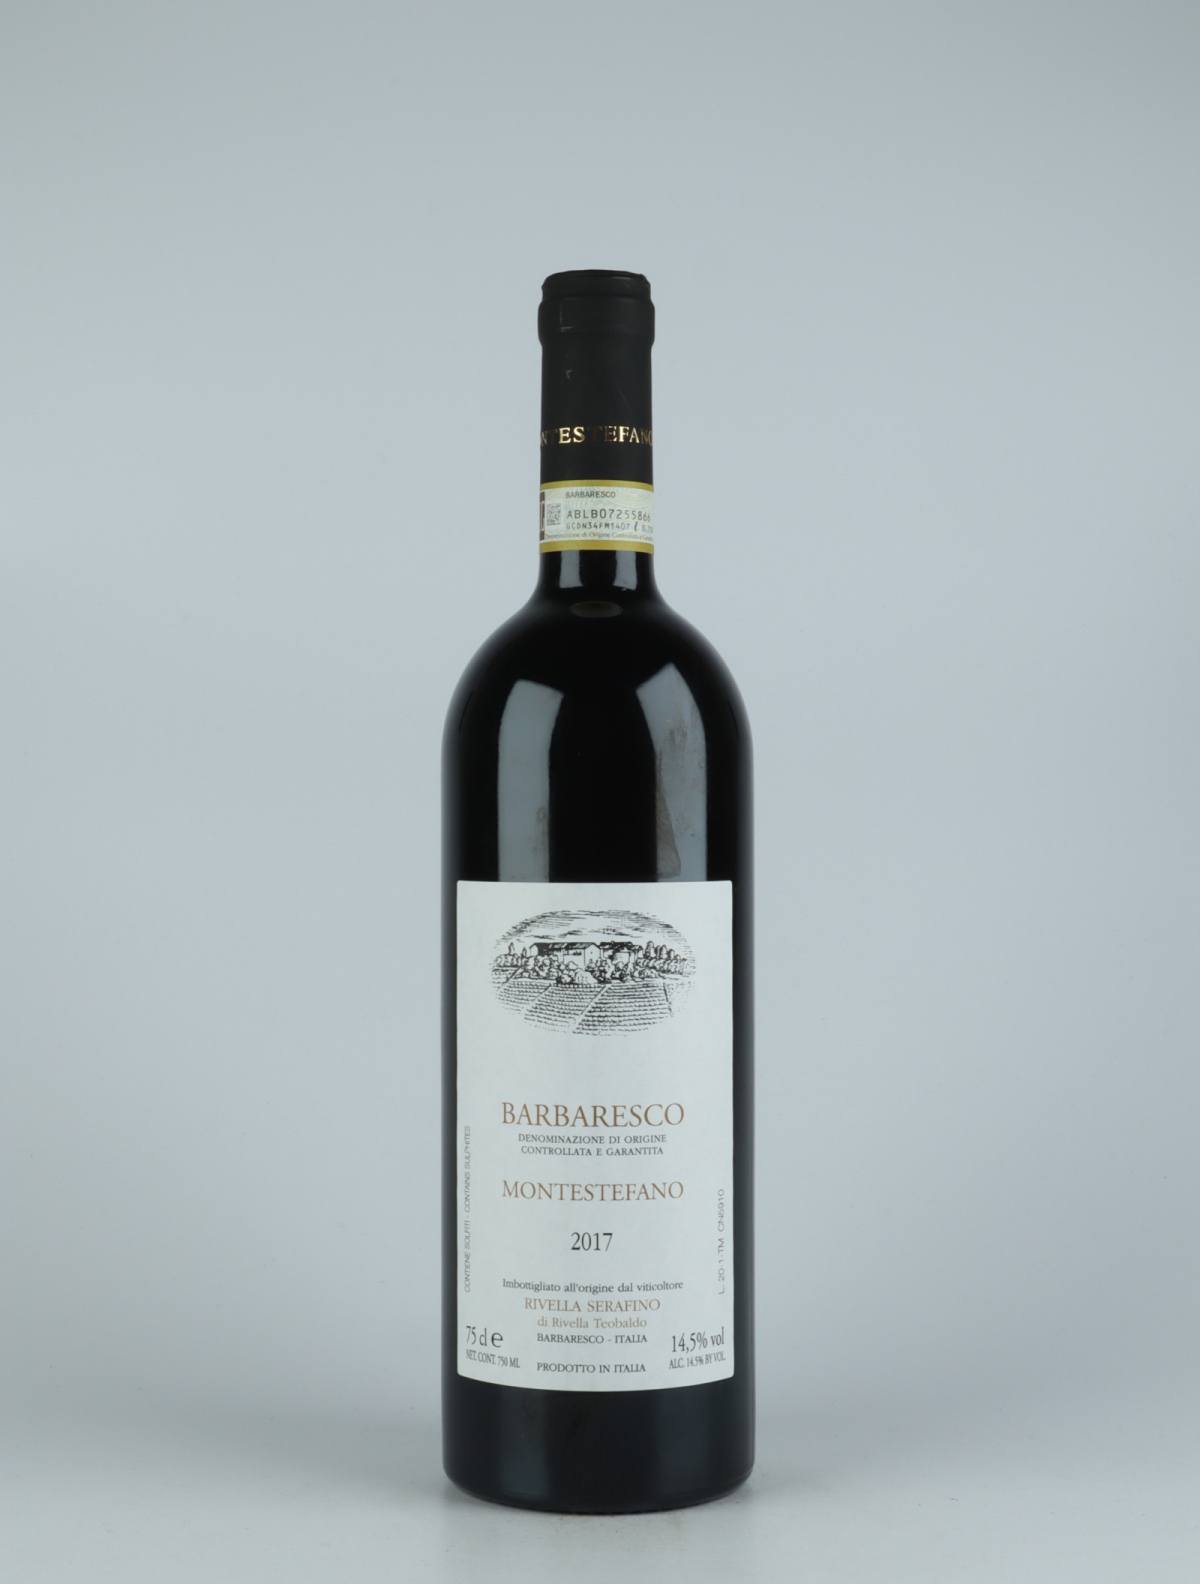 A bottle 2017 Barbaresco - Montestefano Red wine from Rivella Serafino, Piedmont in Italy